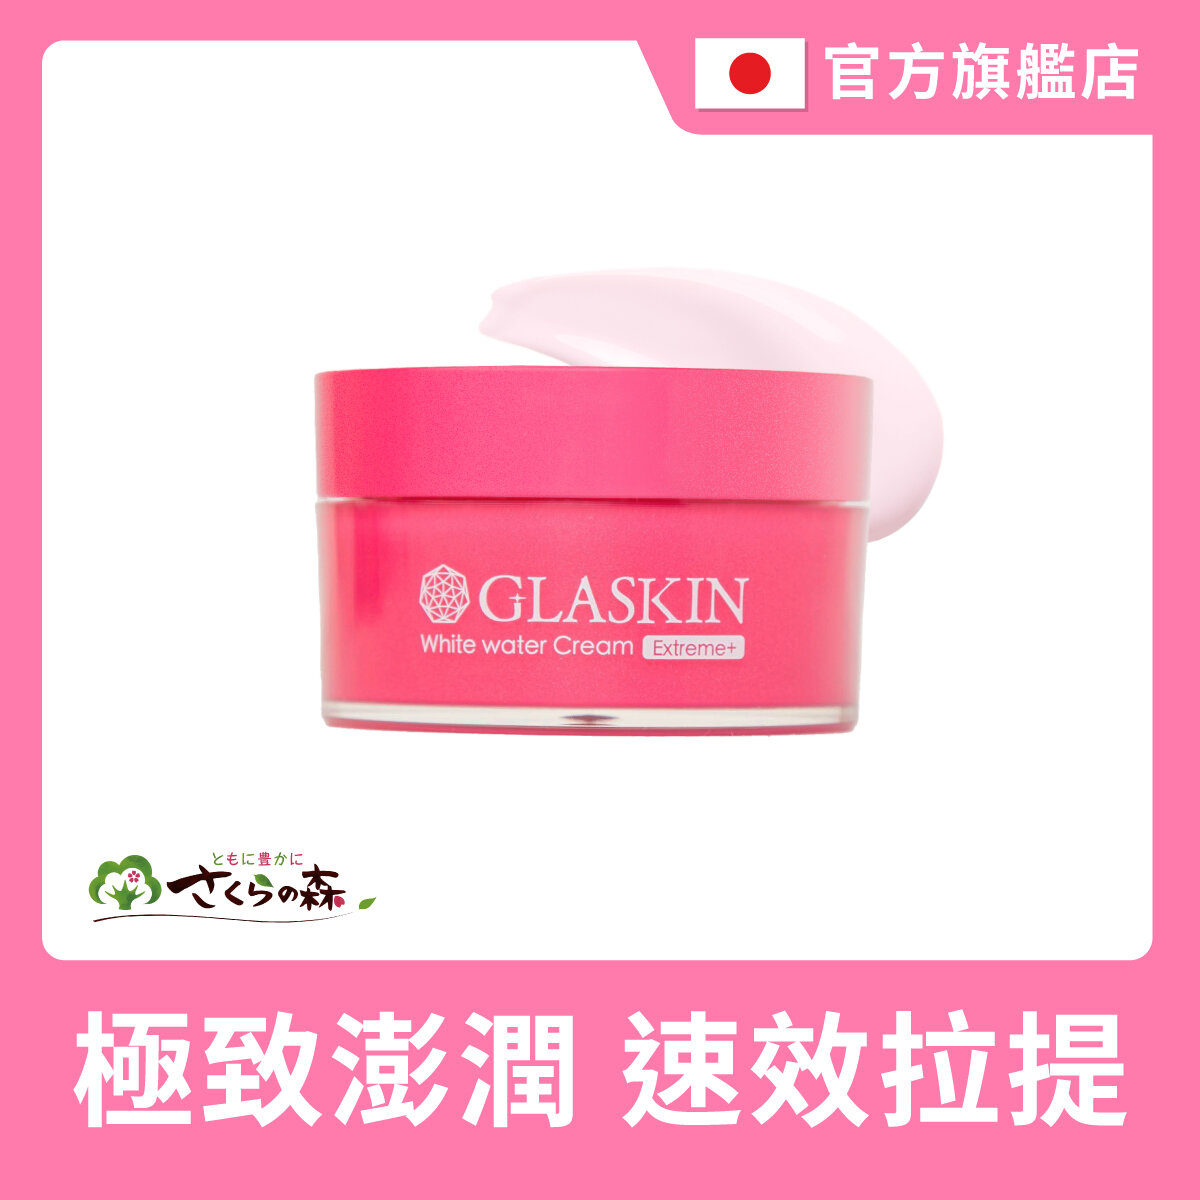 【Made in Japan 】GLASKIN White Water Cream Extreme+ 60g